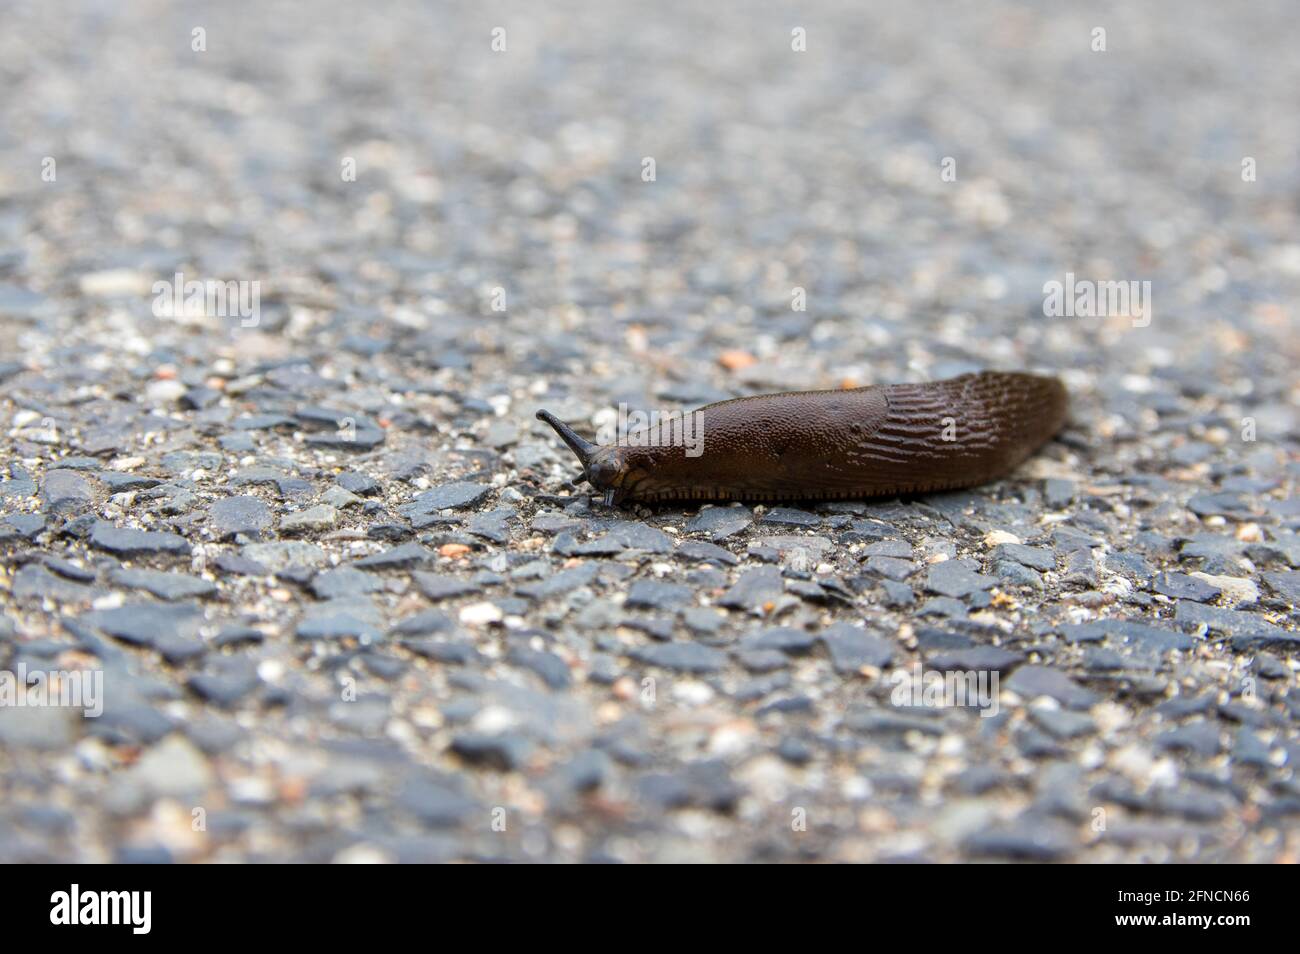 Spanish Slug (Arion vulgaris) on tarmac road. Selective Focus with shallow depth of field Stock Photo